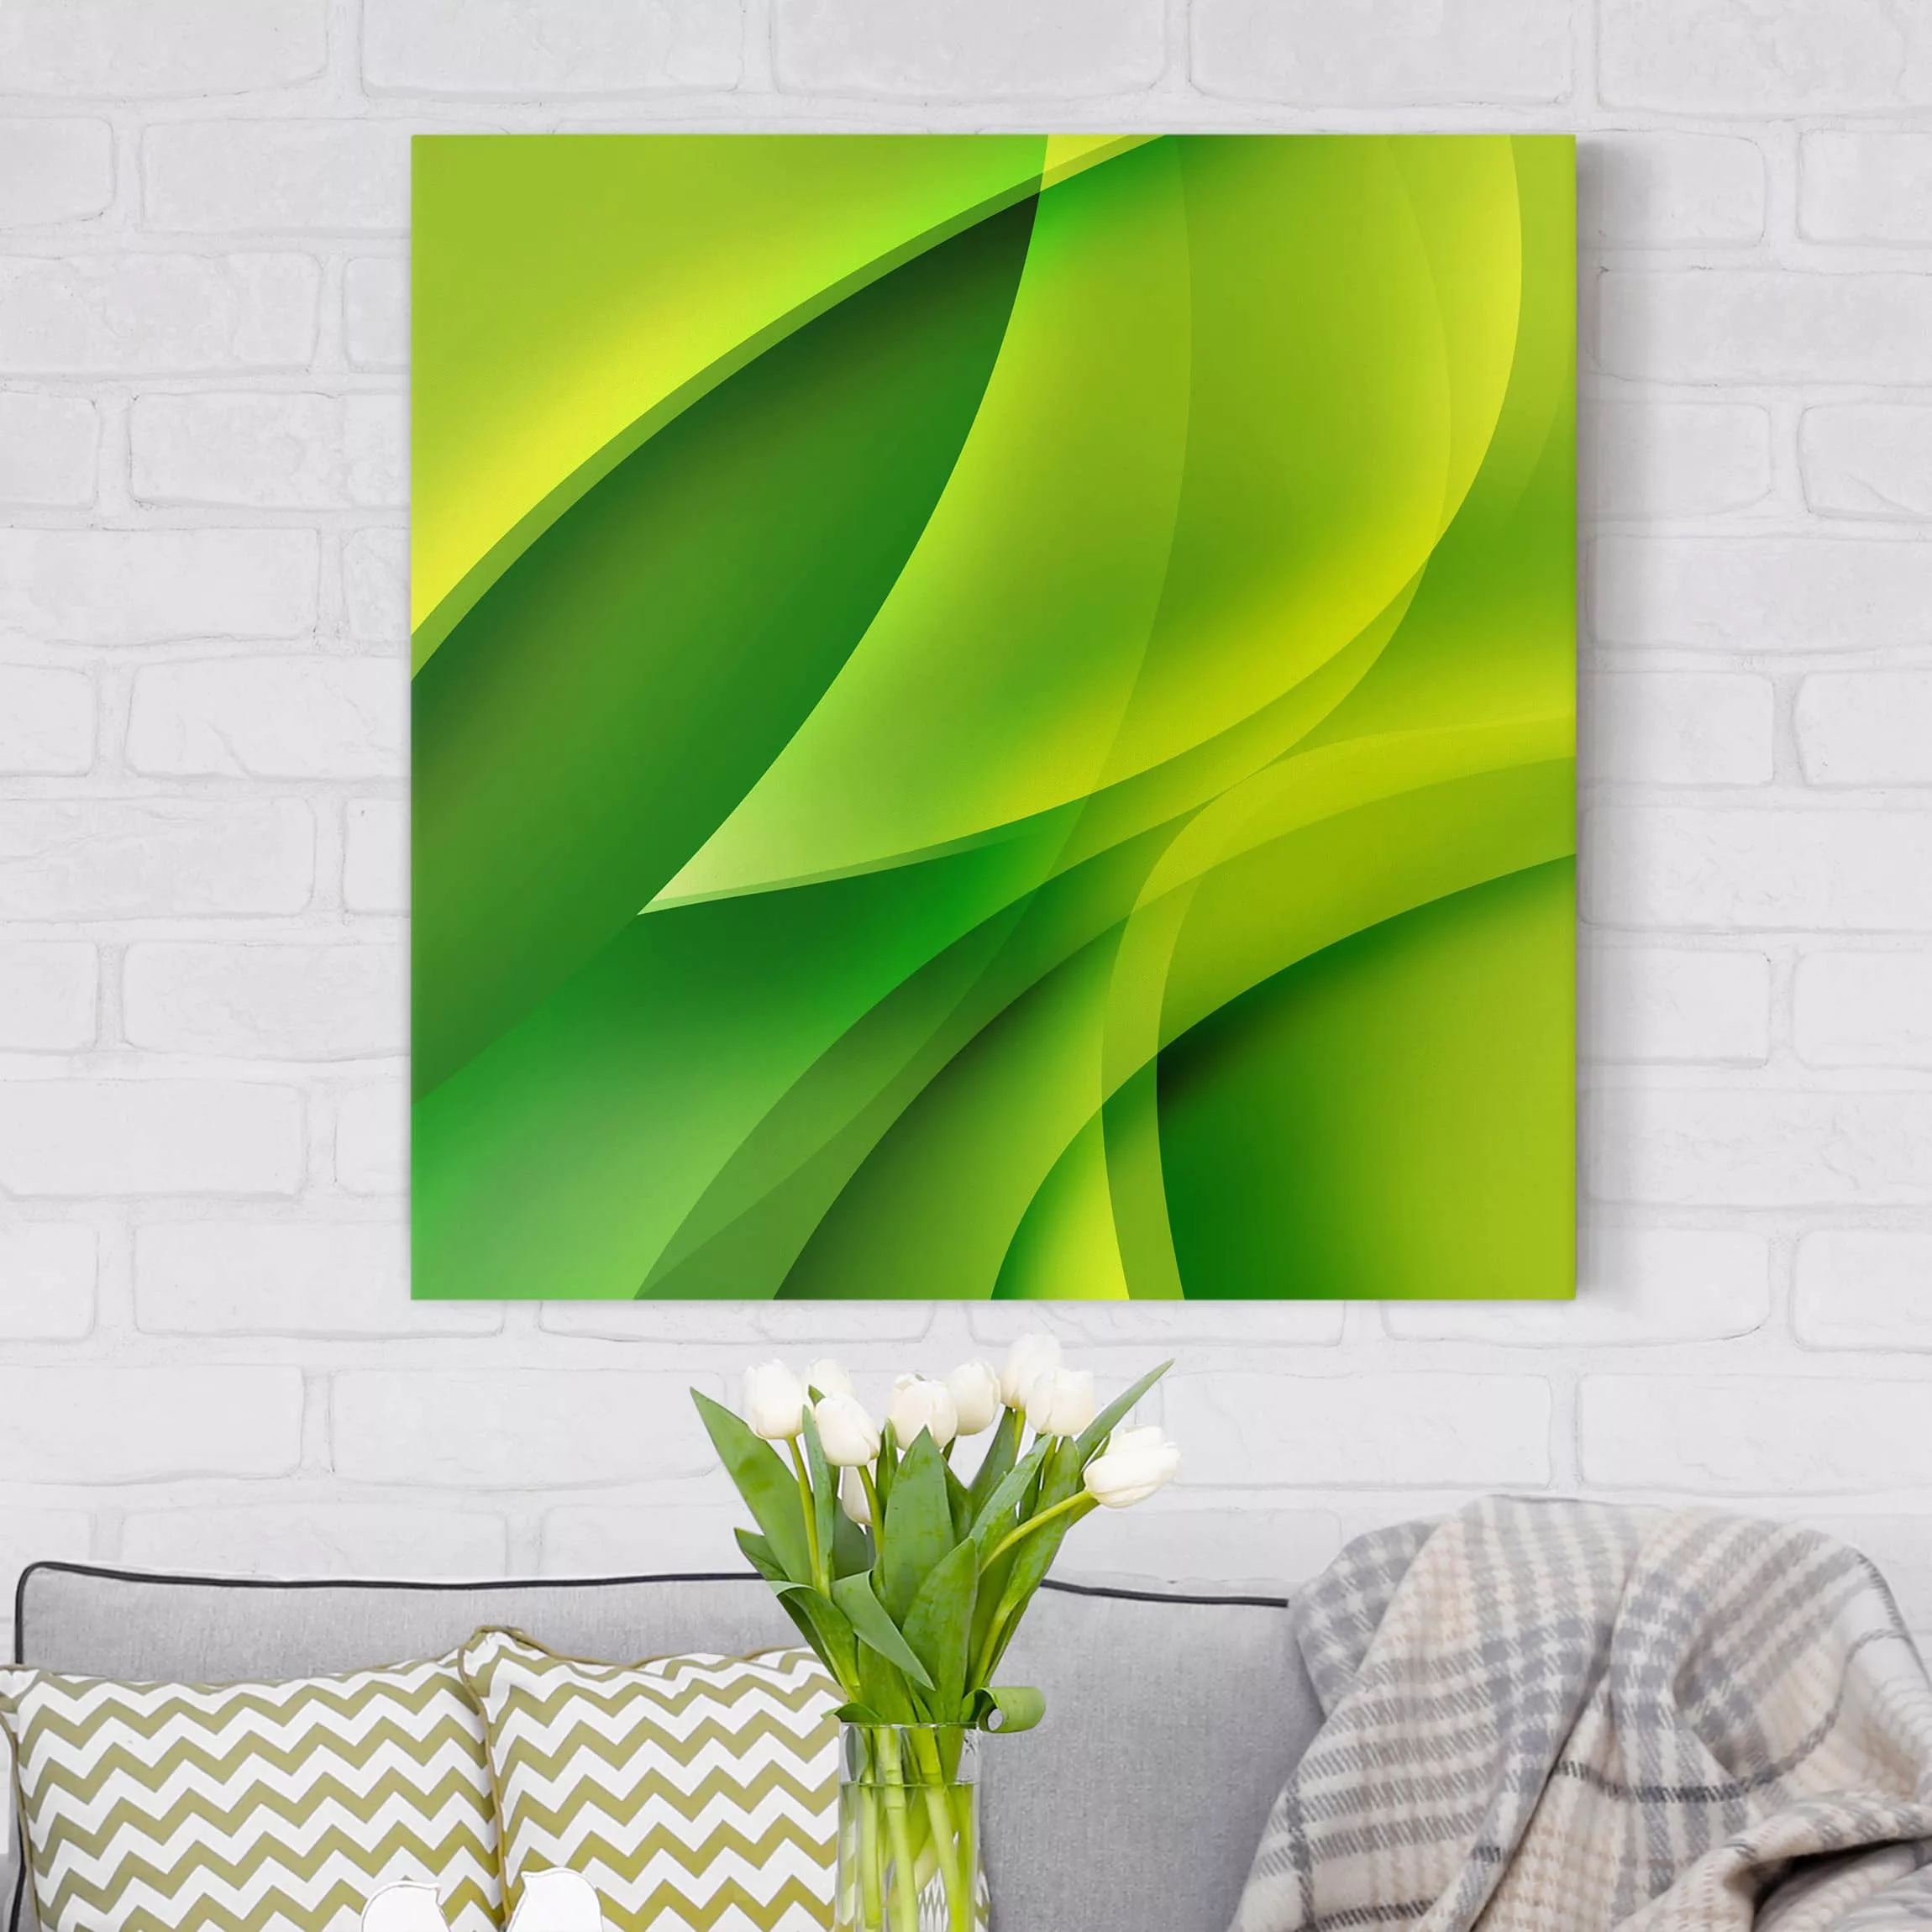 Leinwandbild Abstrakt - Quadrat Green Composition günstig online kaufen